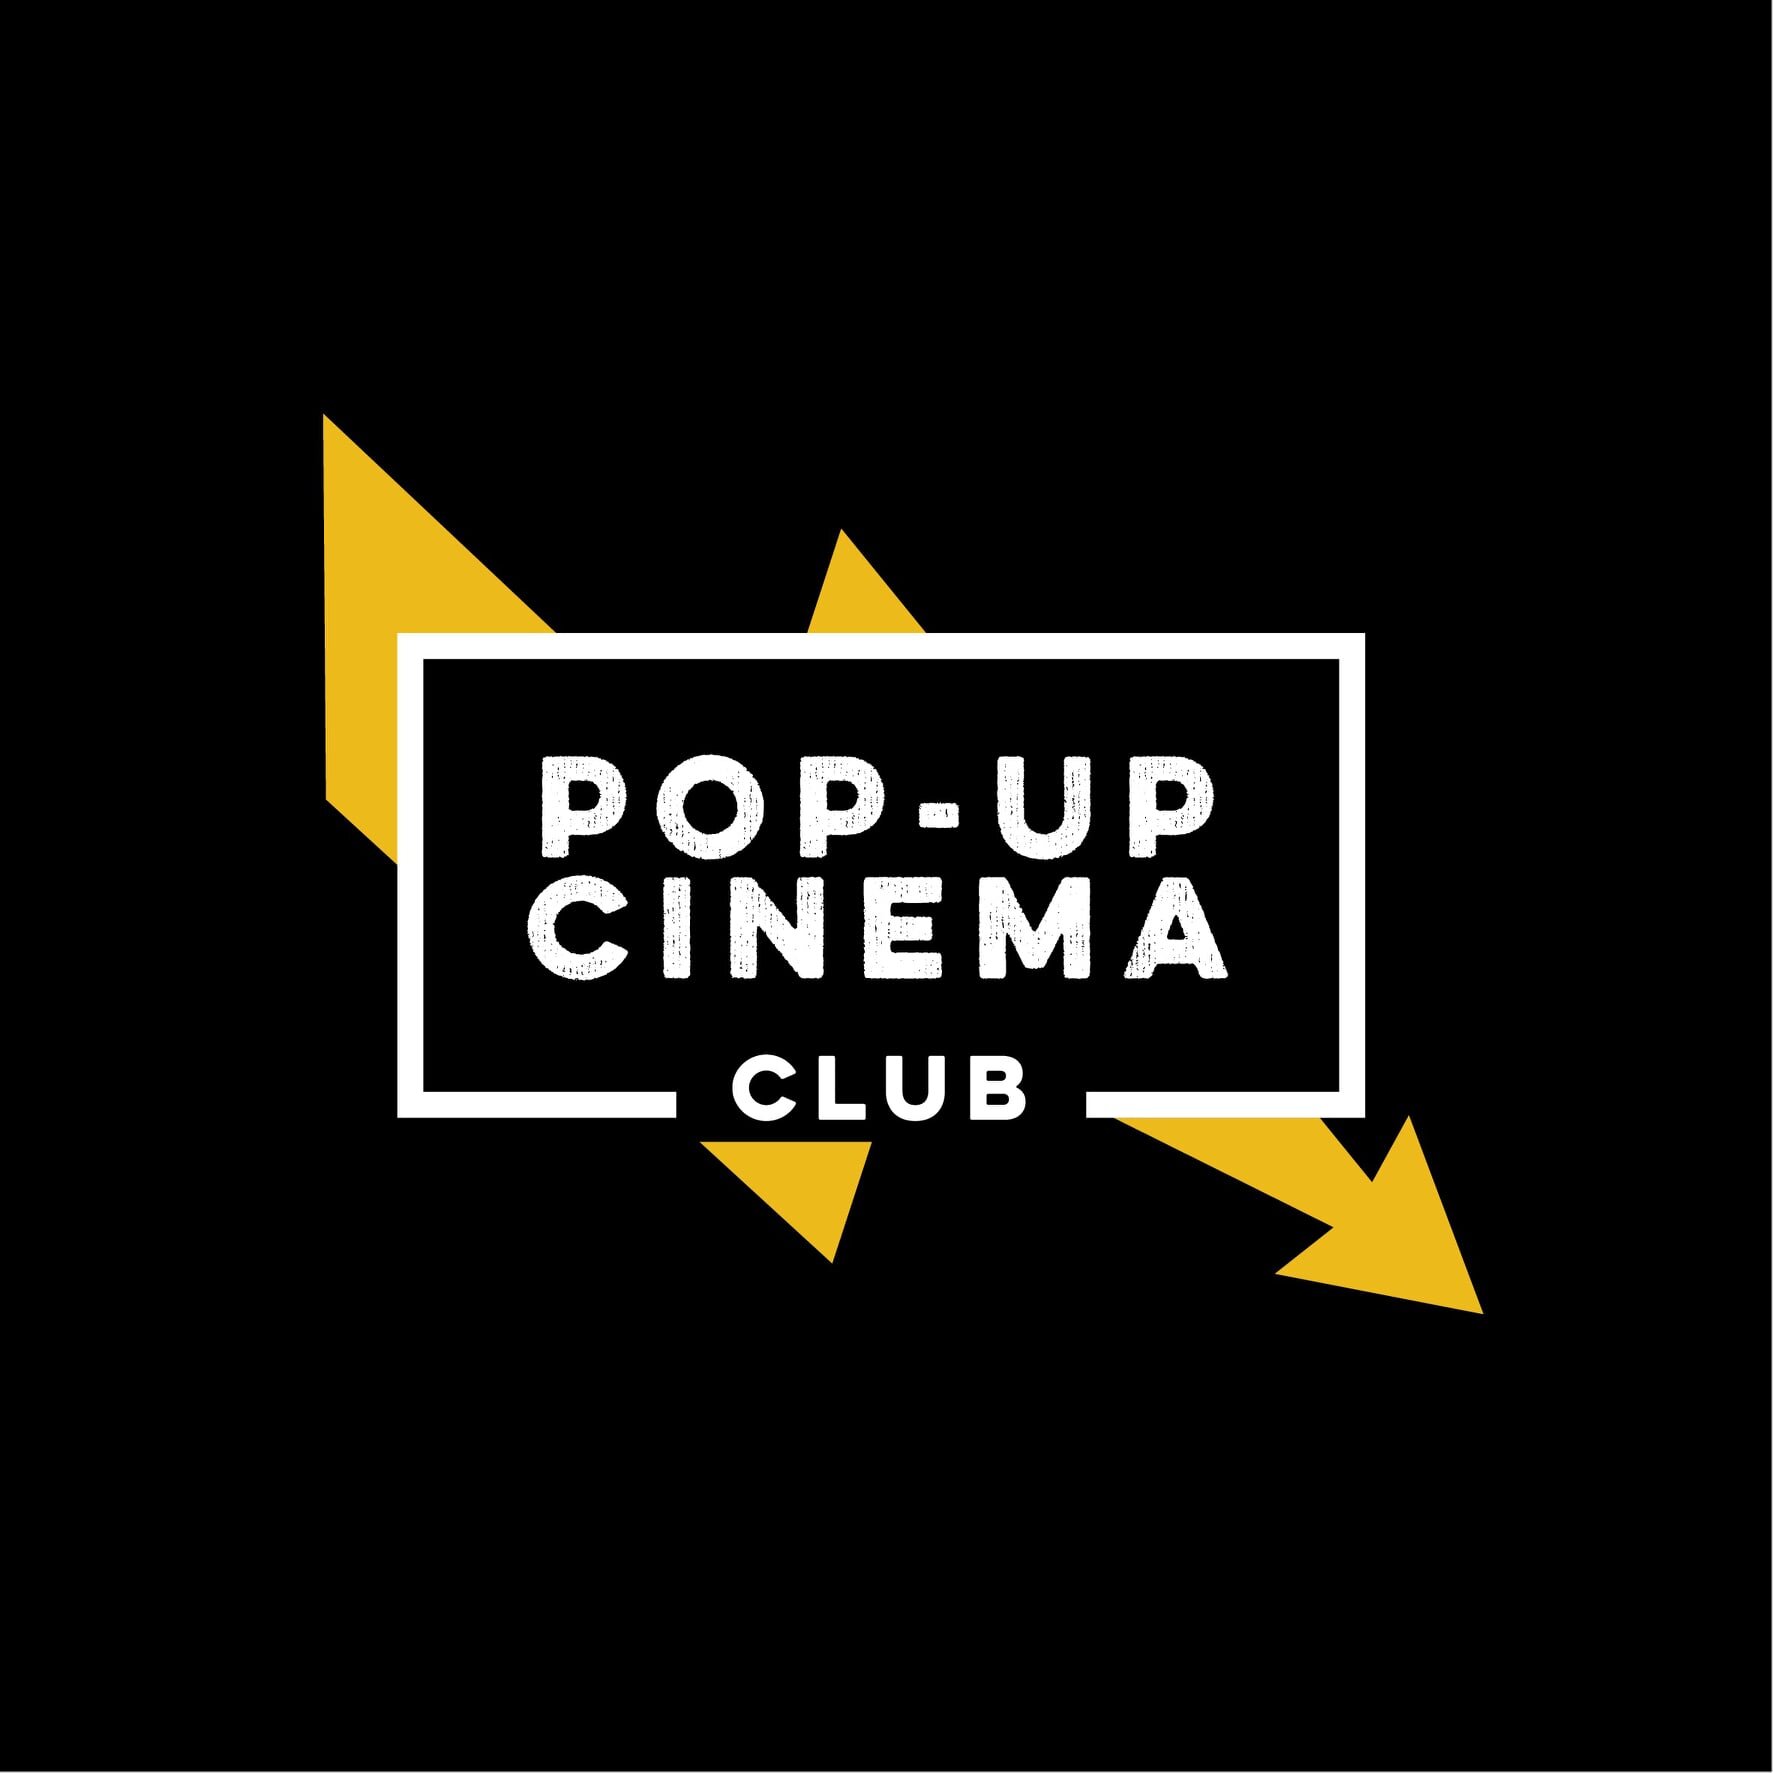 Pop-Up Cinema Club Logo.jpg